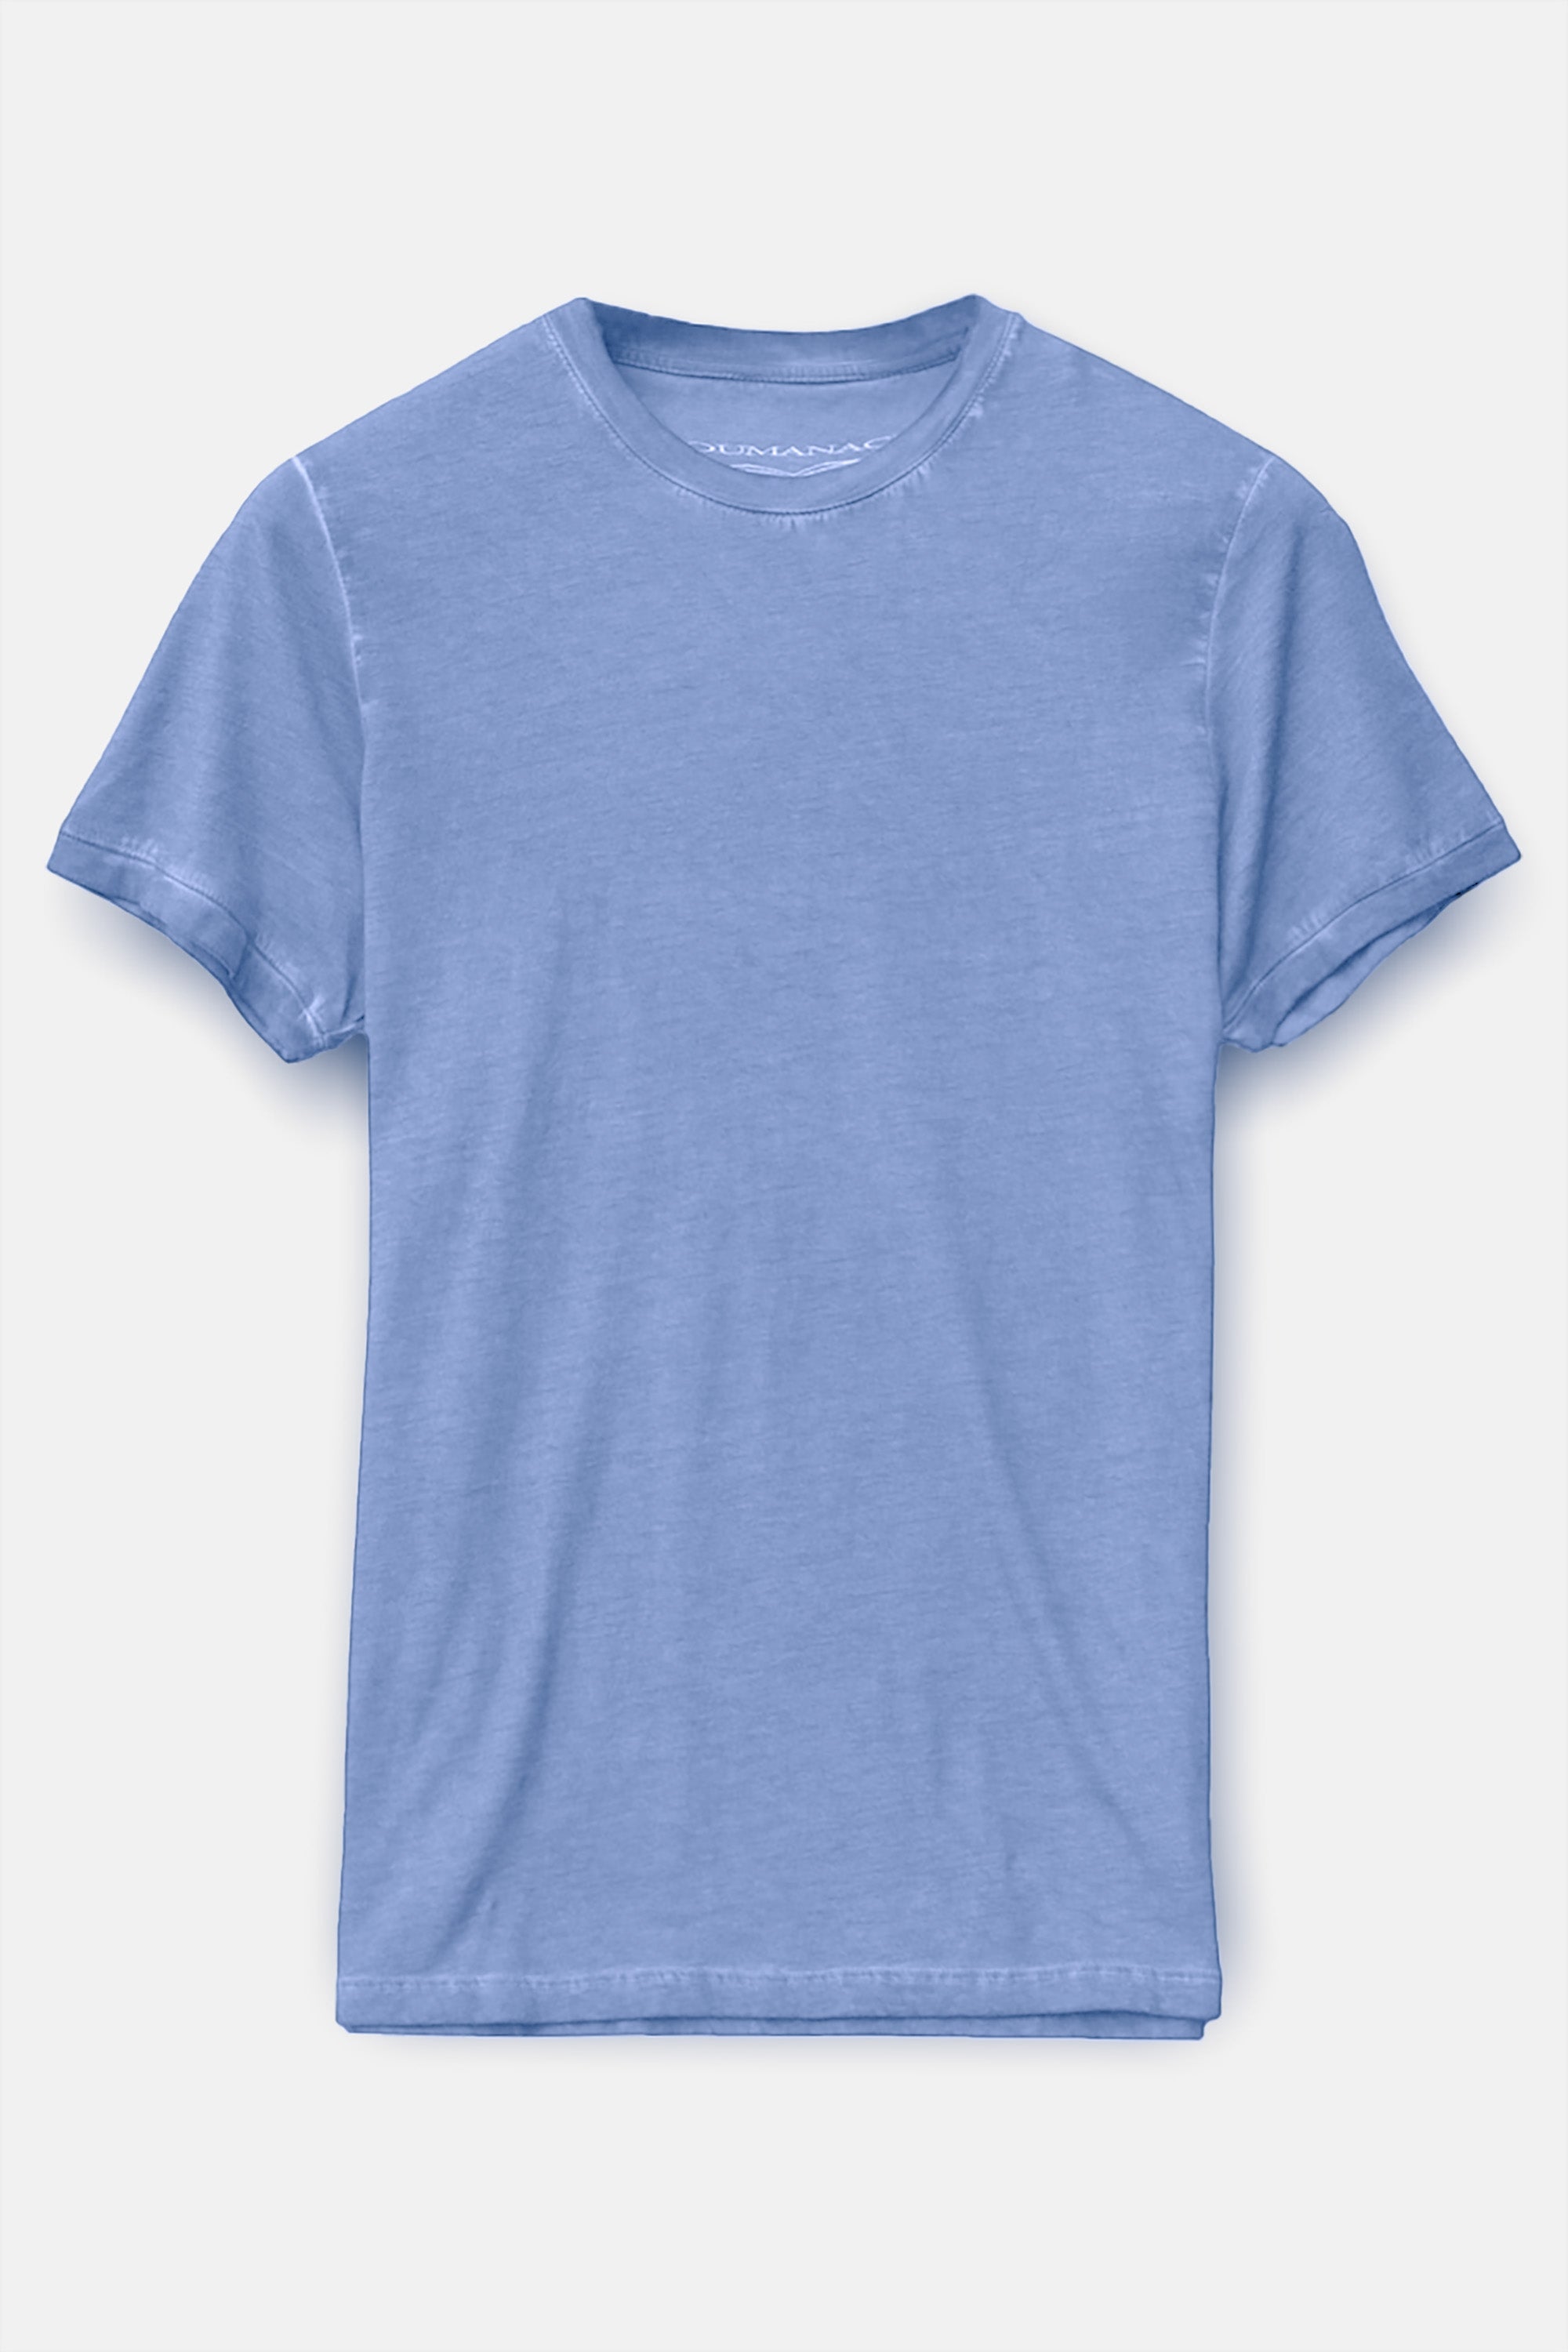 Smart Casual Cotton T-Shirt - Bay